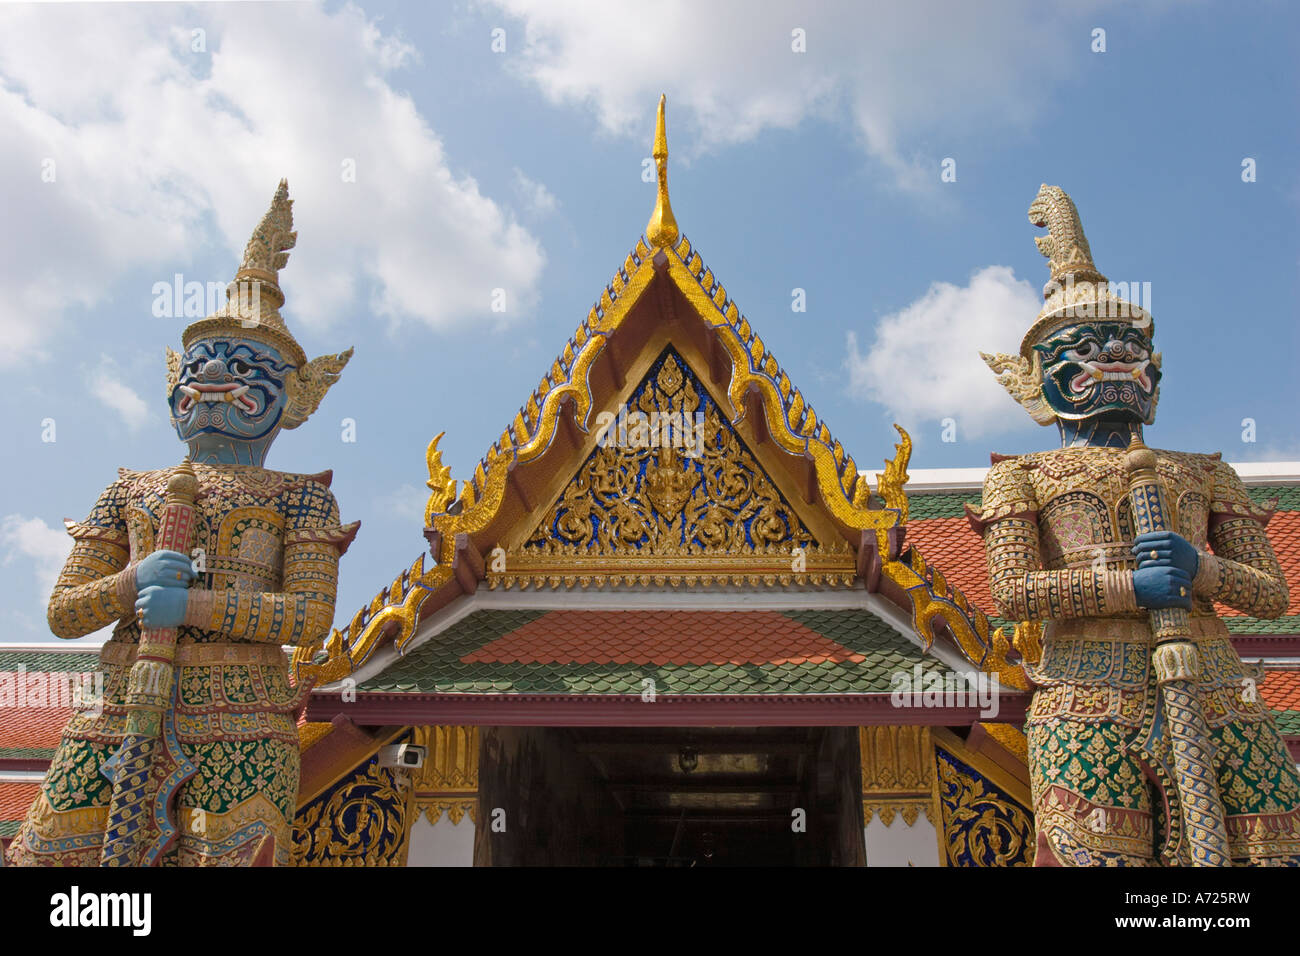 Statues of mythical giants. Wat Phra Kaeo, Bangkok, Thailand. Stock Photo